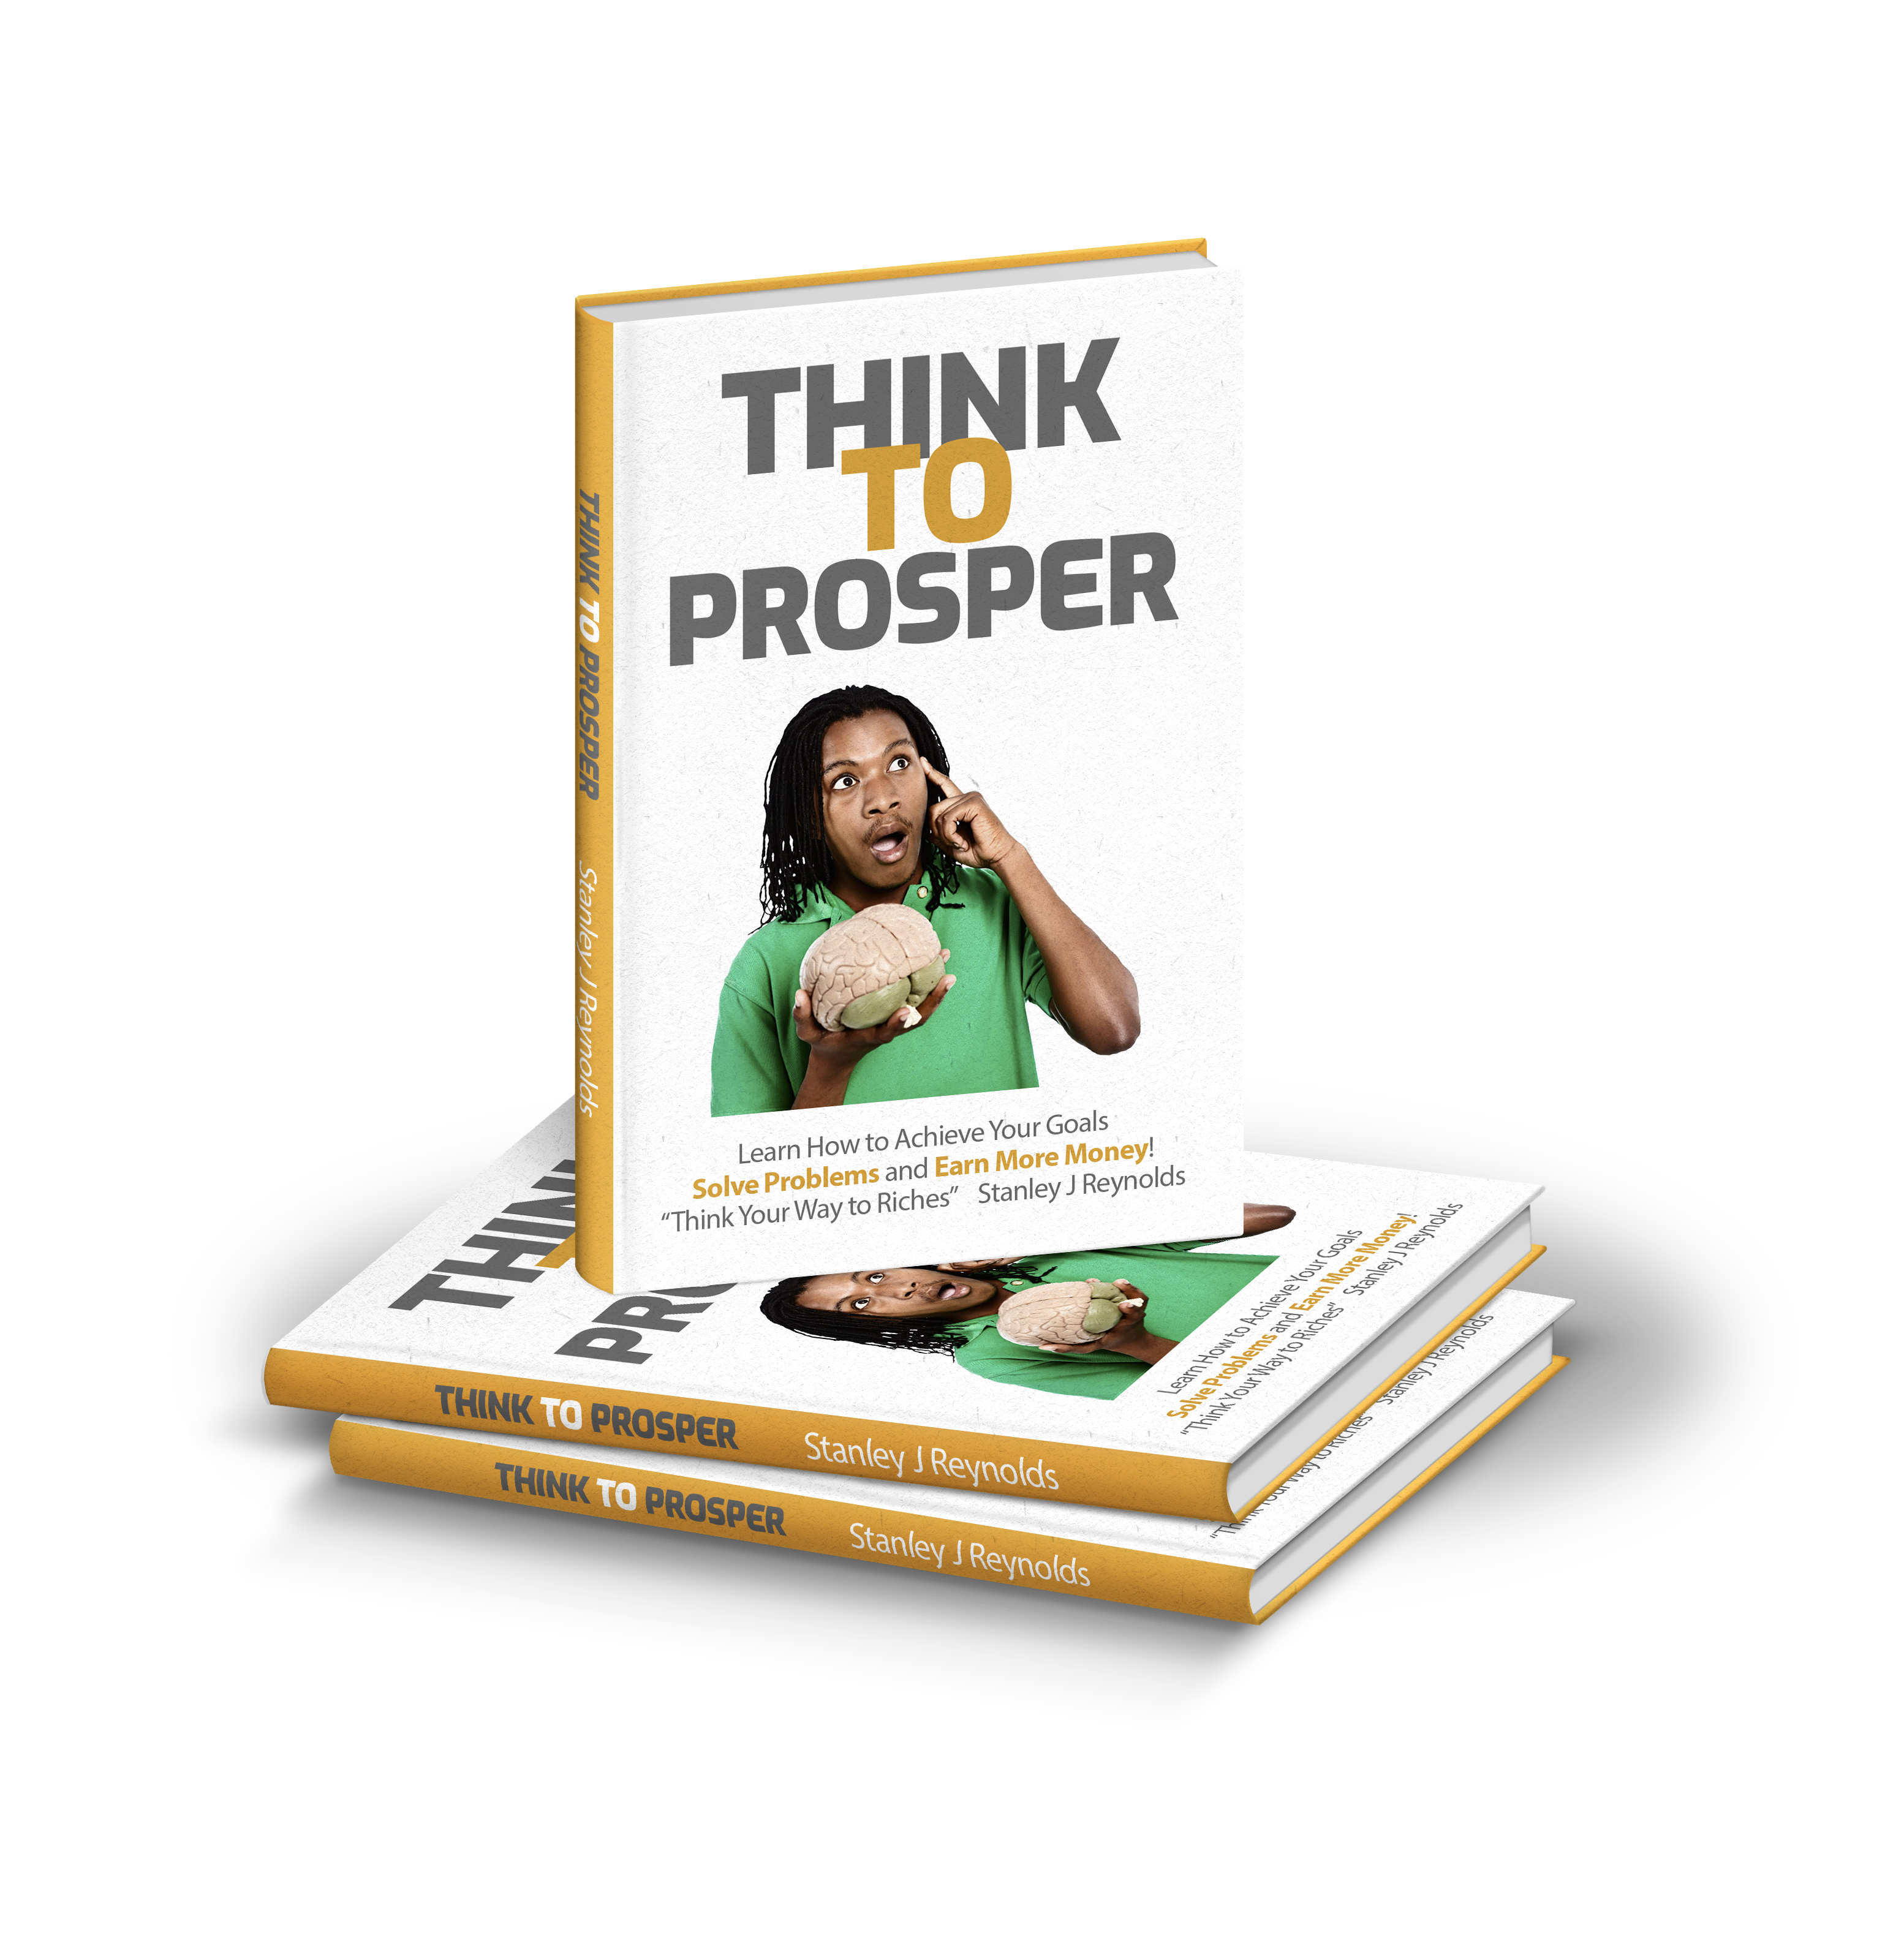 Think to prosper